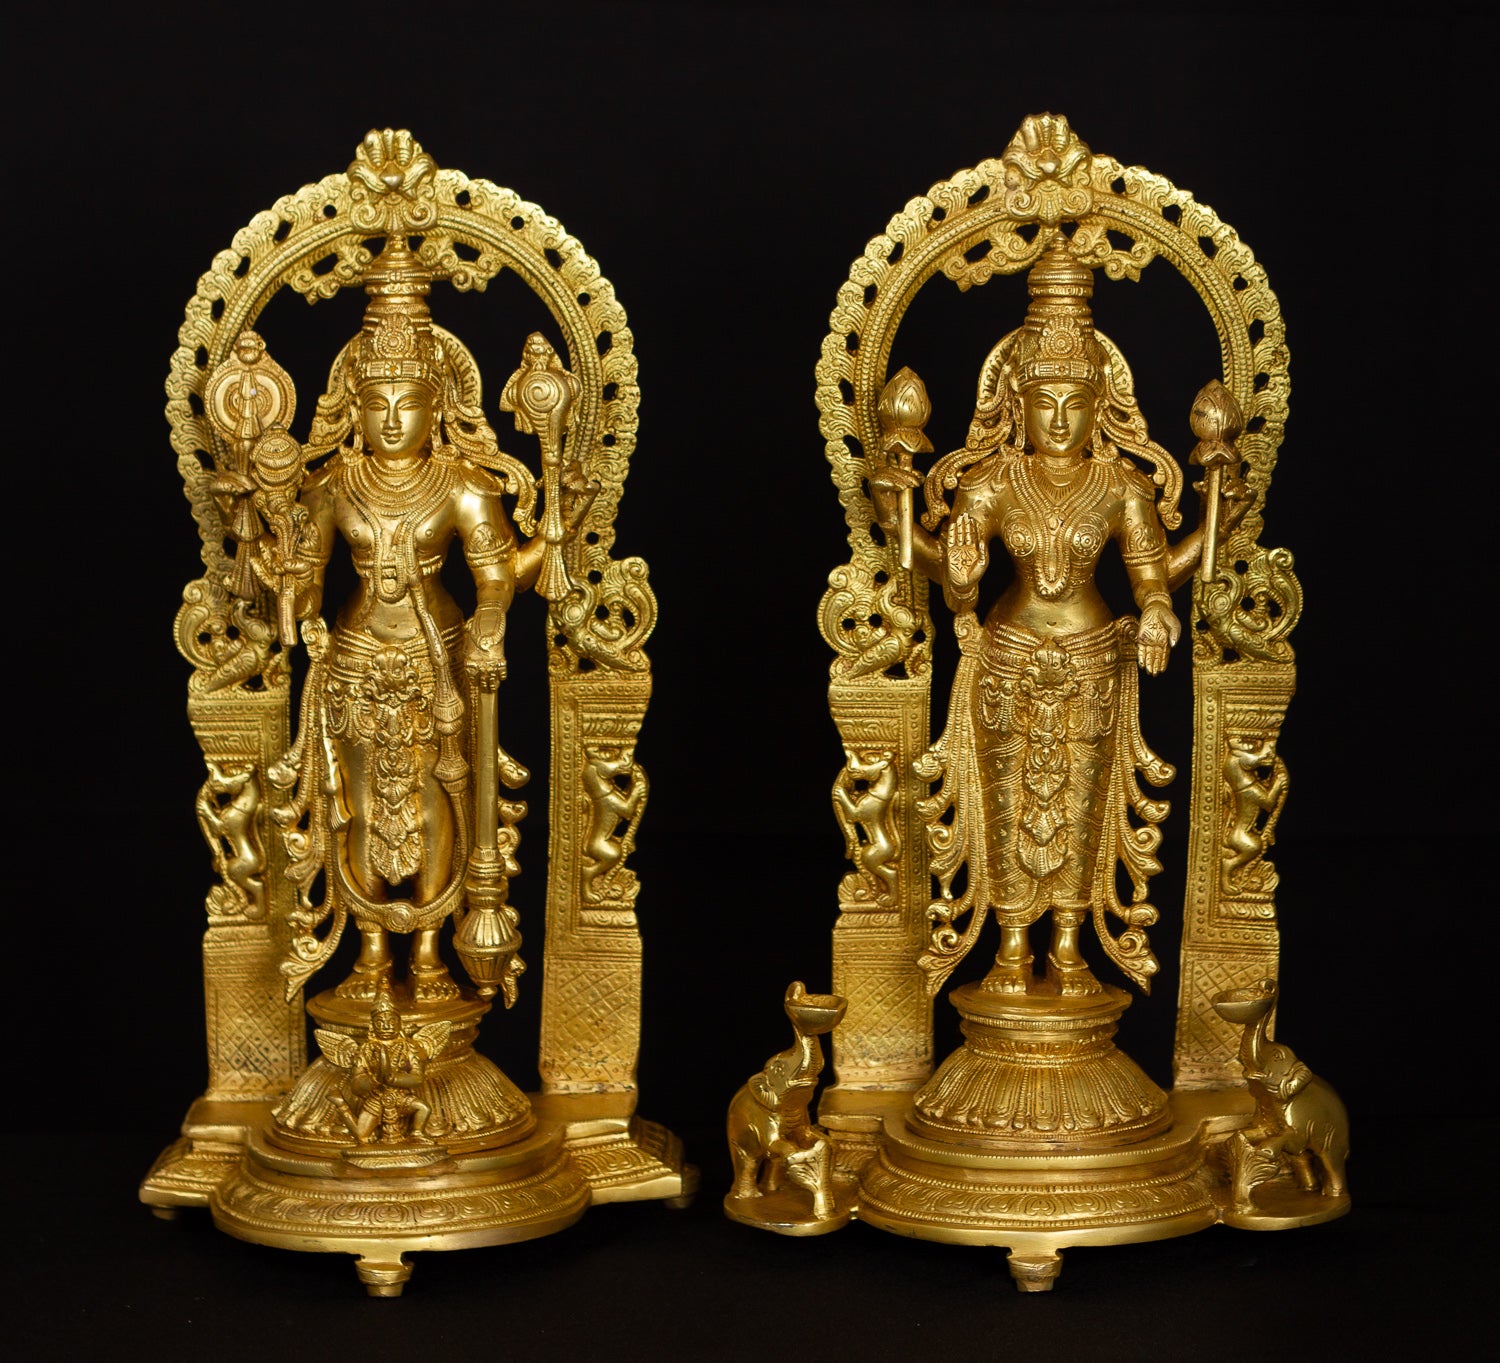 Lord Vishnu and Goddess Lakshmi set